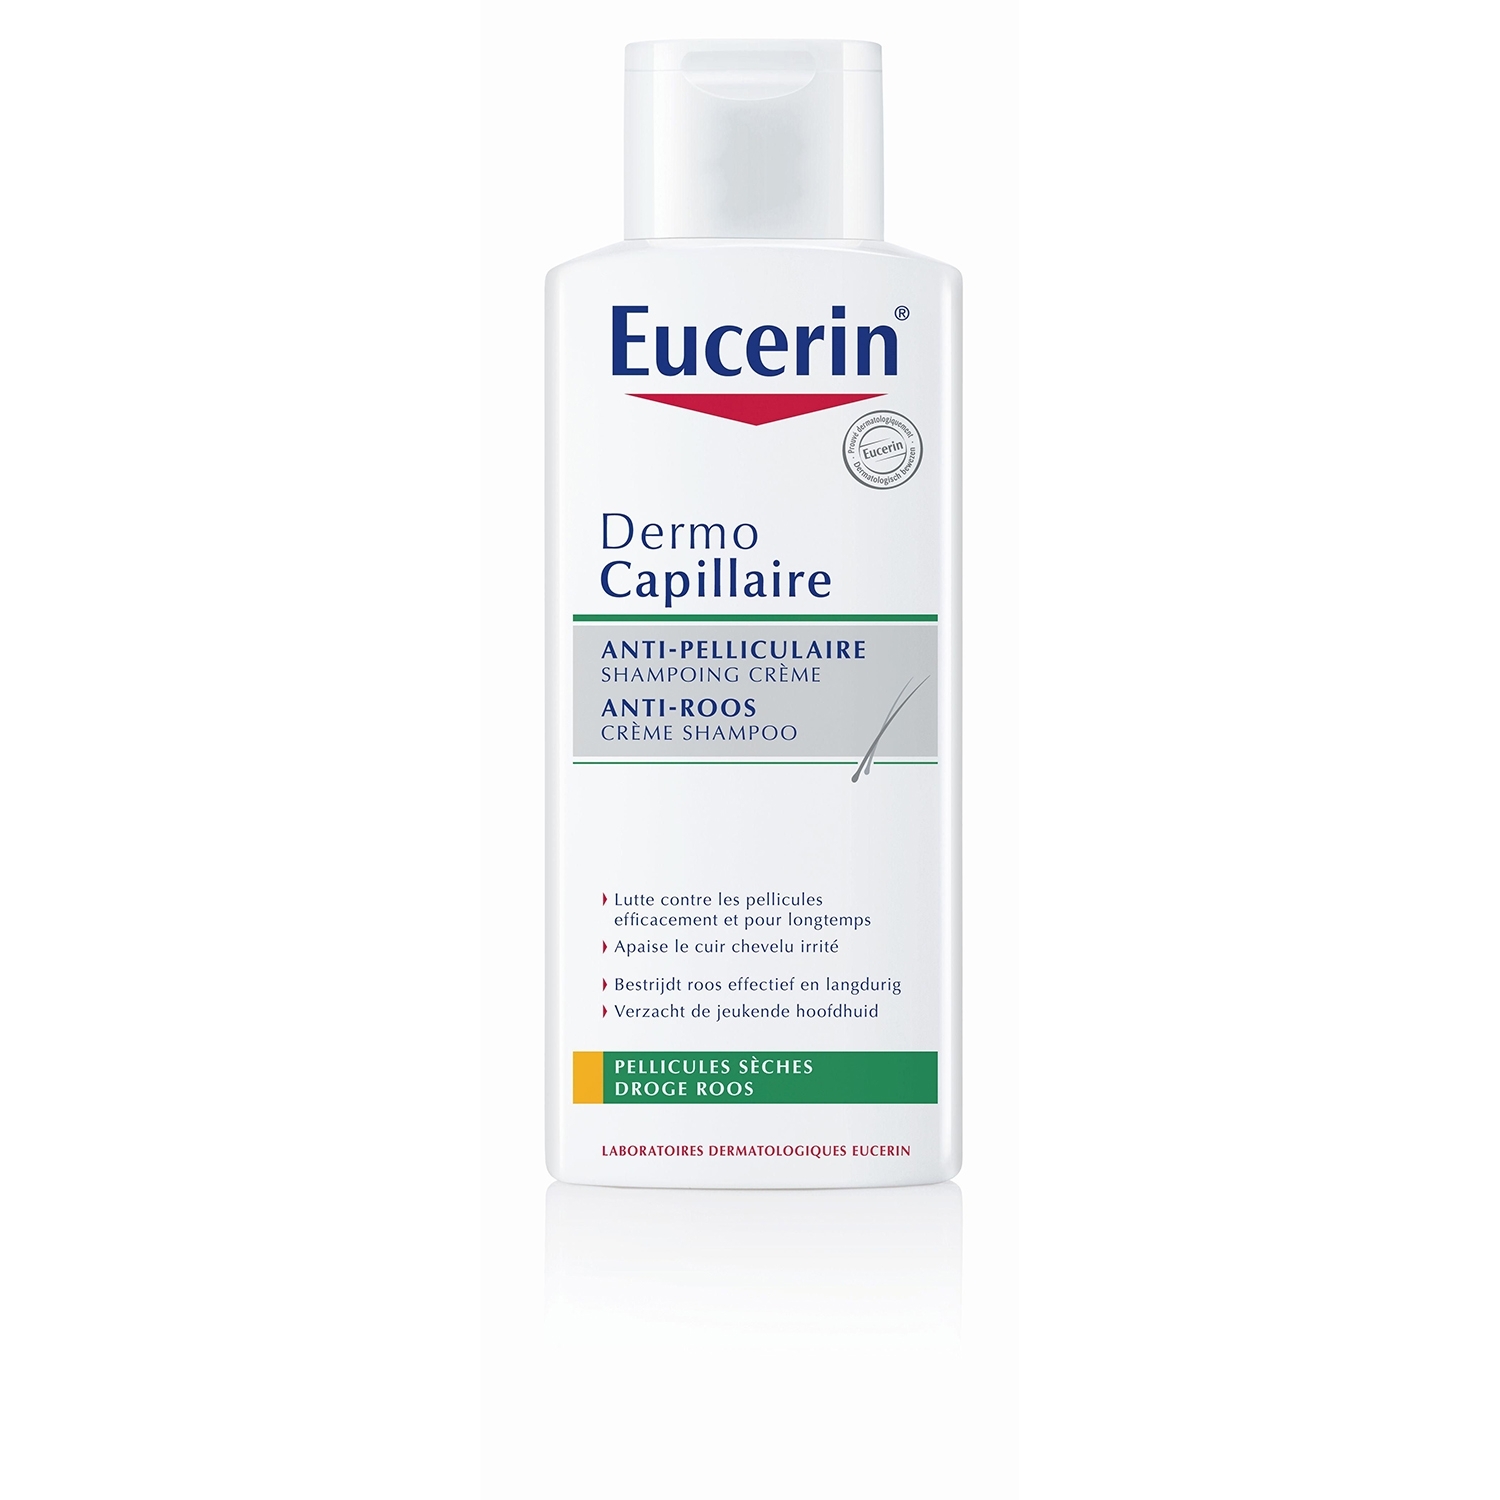 Eucerin shampoing anti-pélliculaire - crème - 250 ml